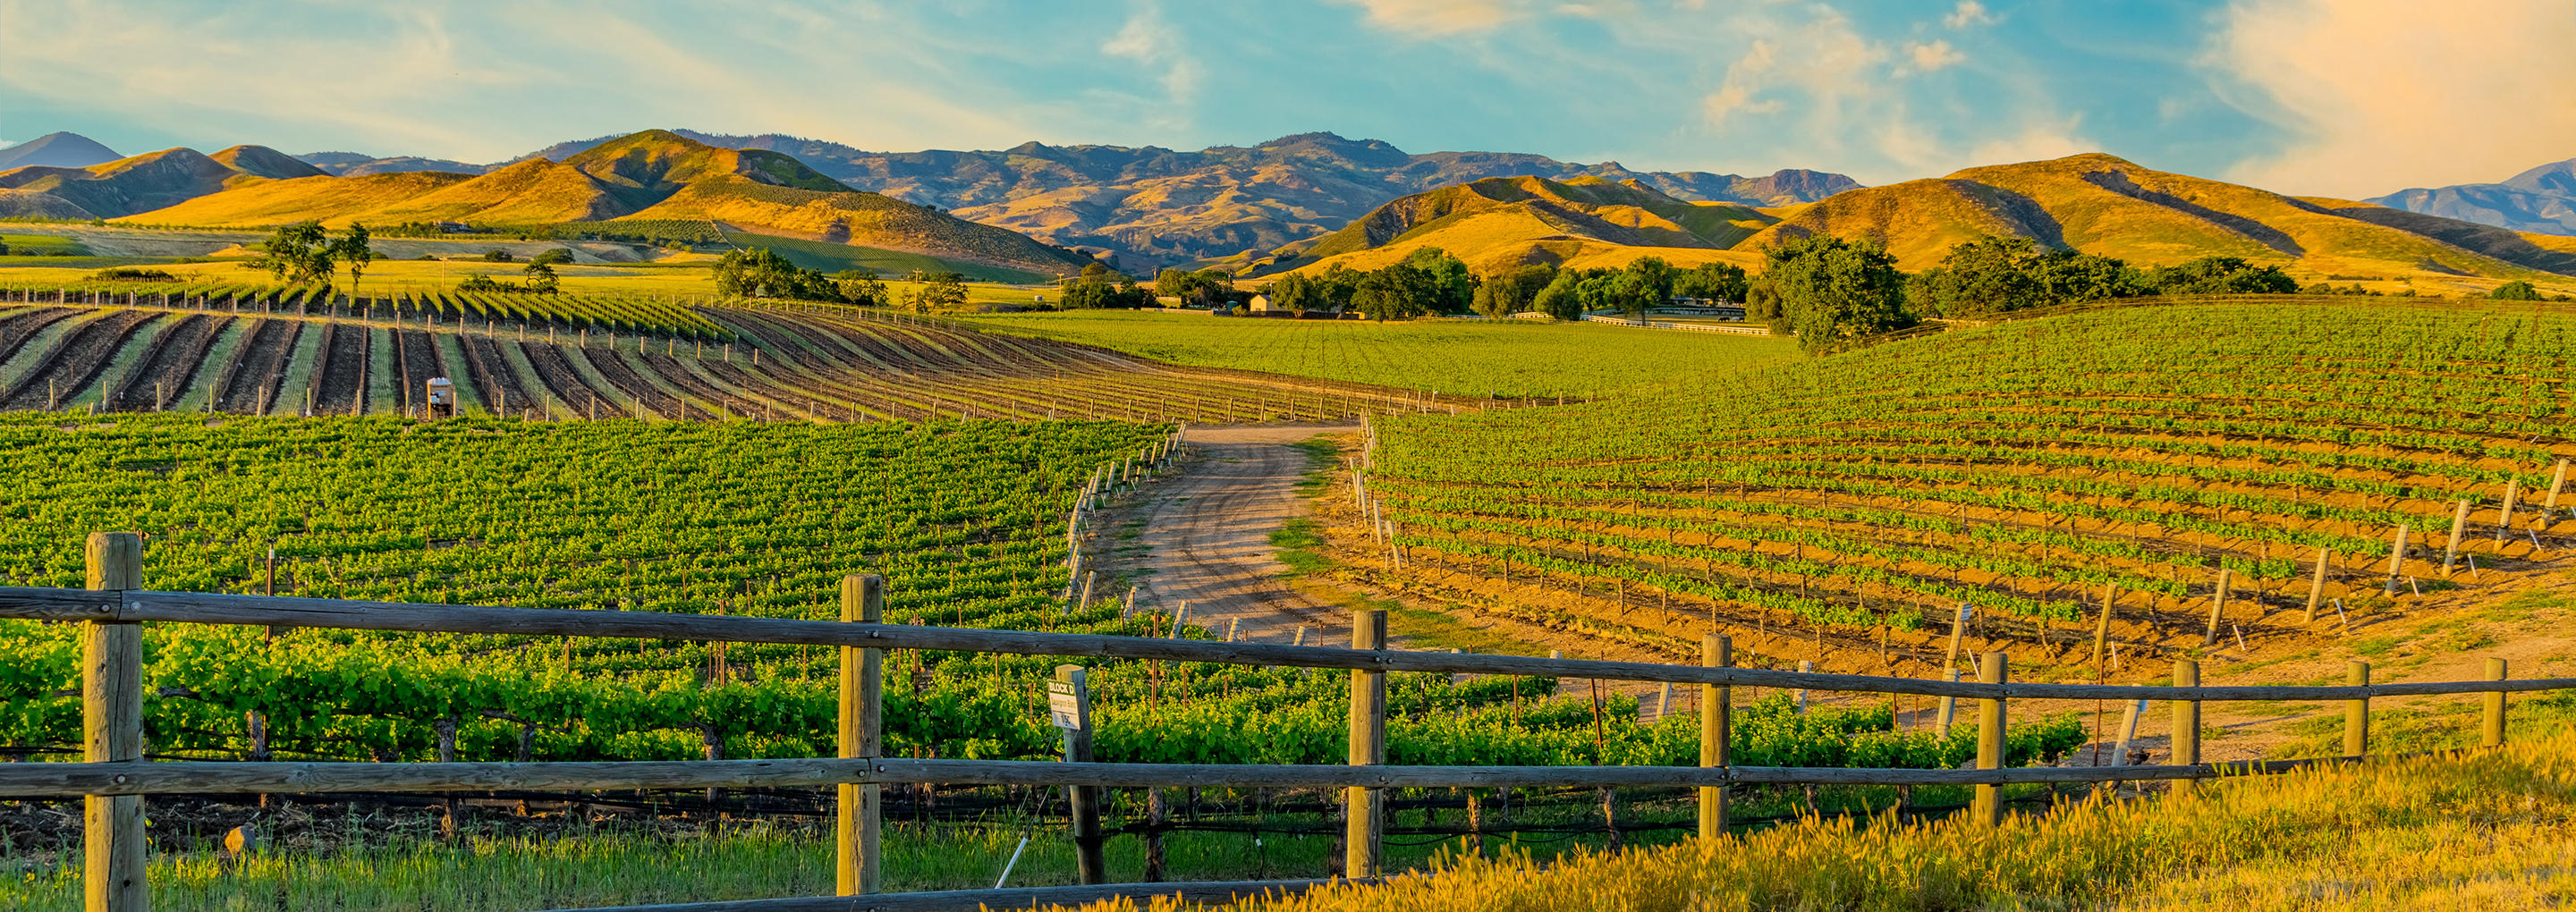 Vineyards in northern California